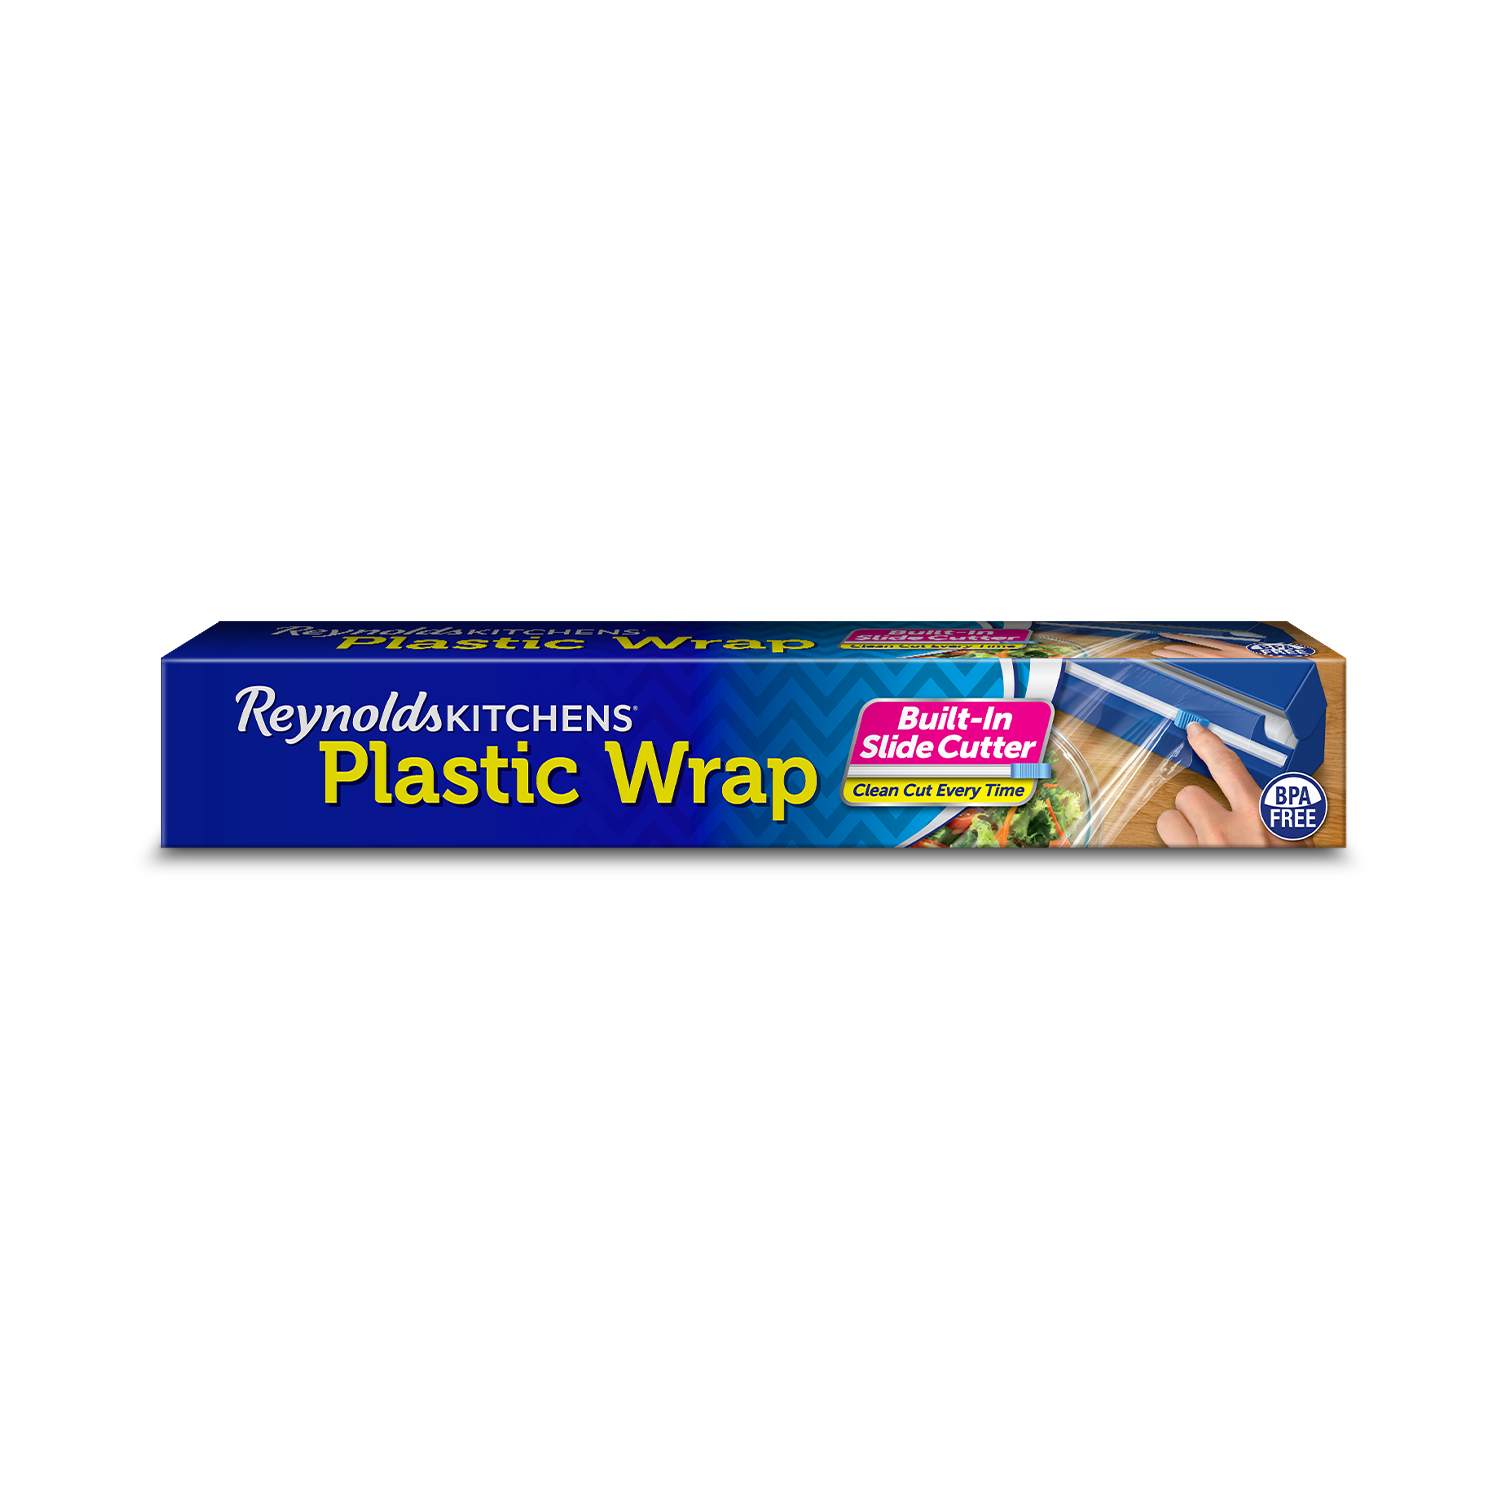 20 RK Plastic Wrap 2021 0 